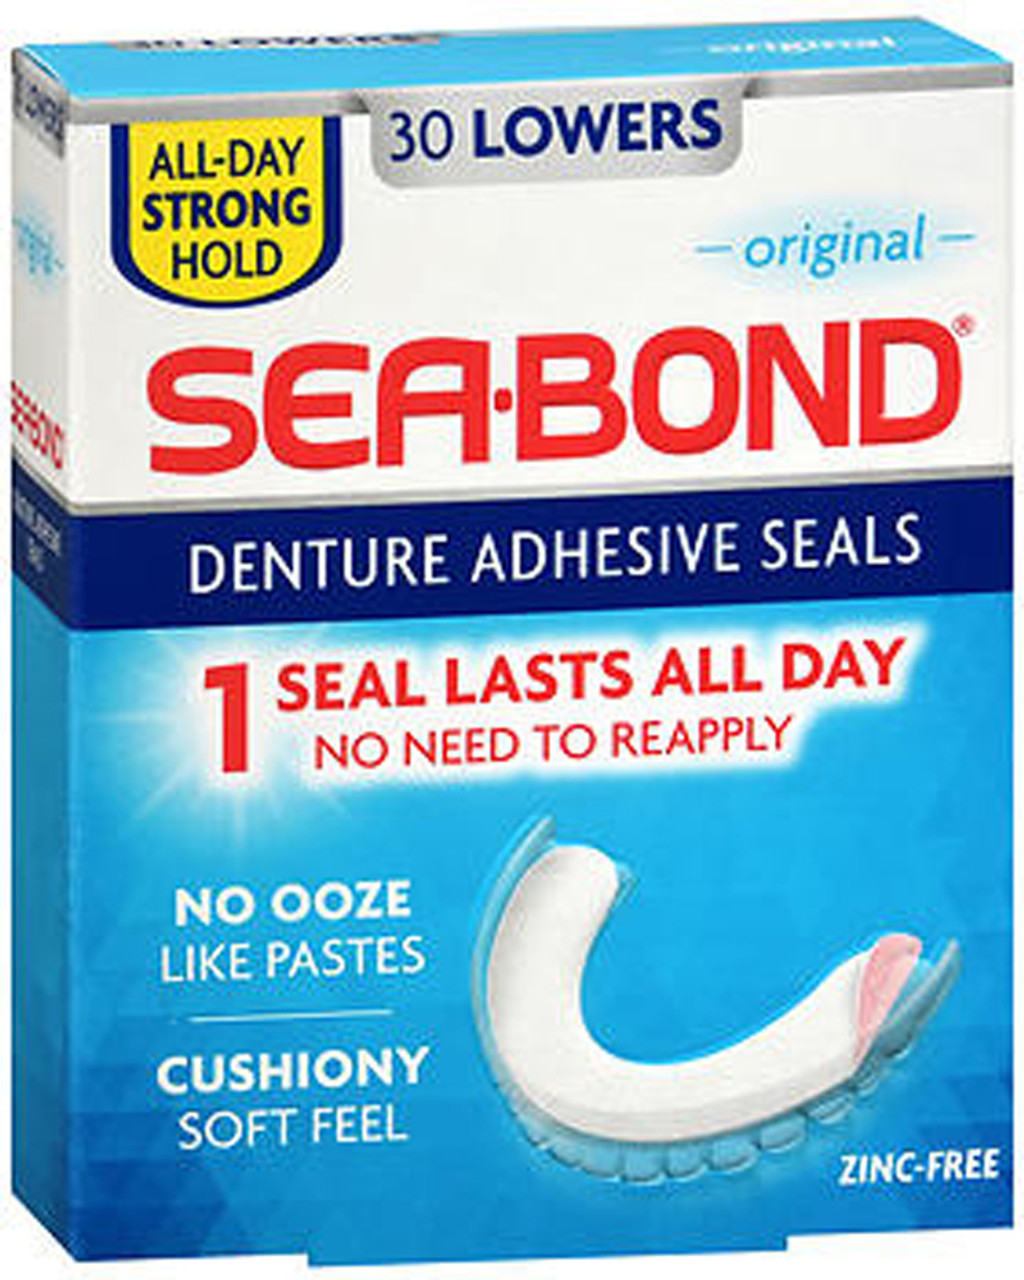 Sea-Bond Upper Adhesive Denture Seals, Original, 30 ct - Fry's Food Stores